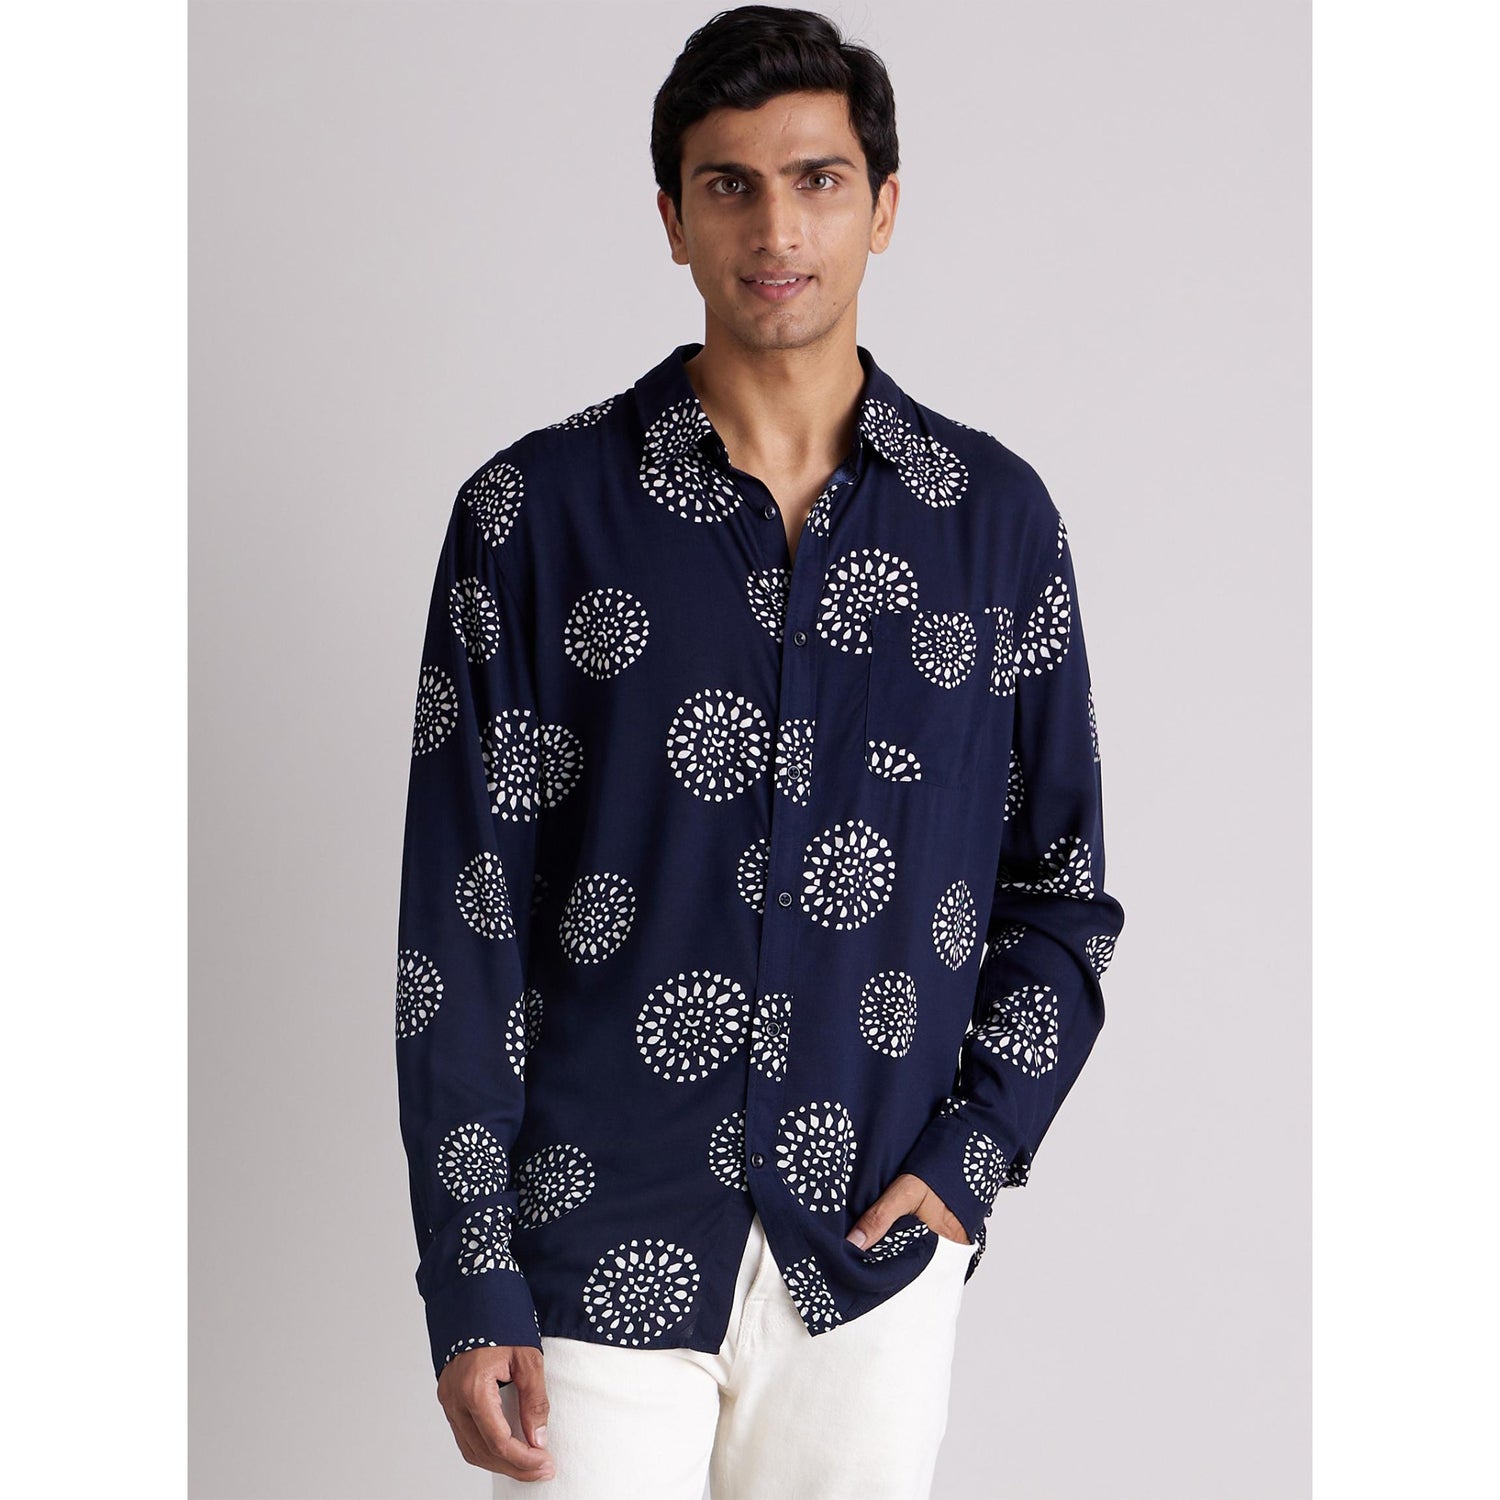 Navy Blue Classic Floral Printed Cotton Casual Shirt (DAVISPRNT)